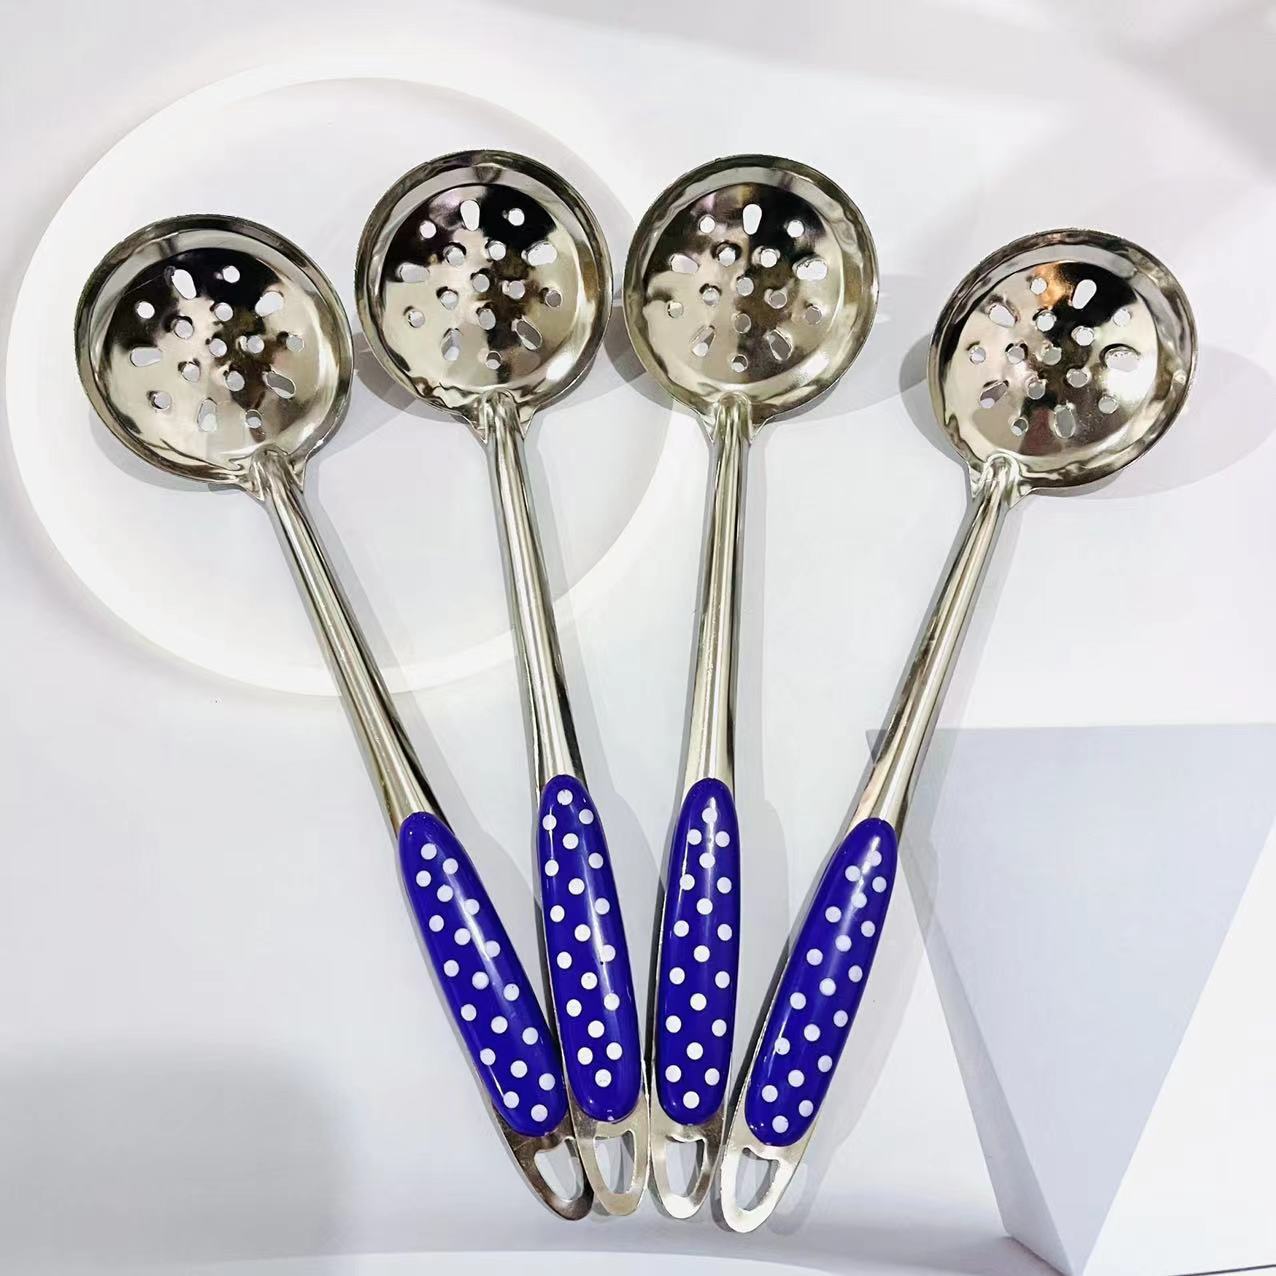 Starry Colander Metal Spoon Household Kitchen Long Handle Hot Pot Spoon Colander Spoon 1 Yuan Supply